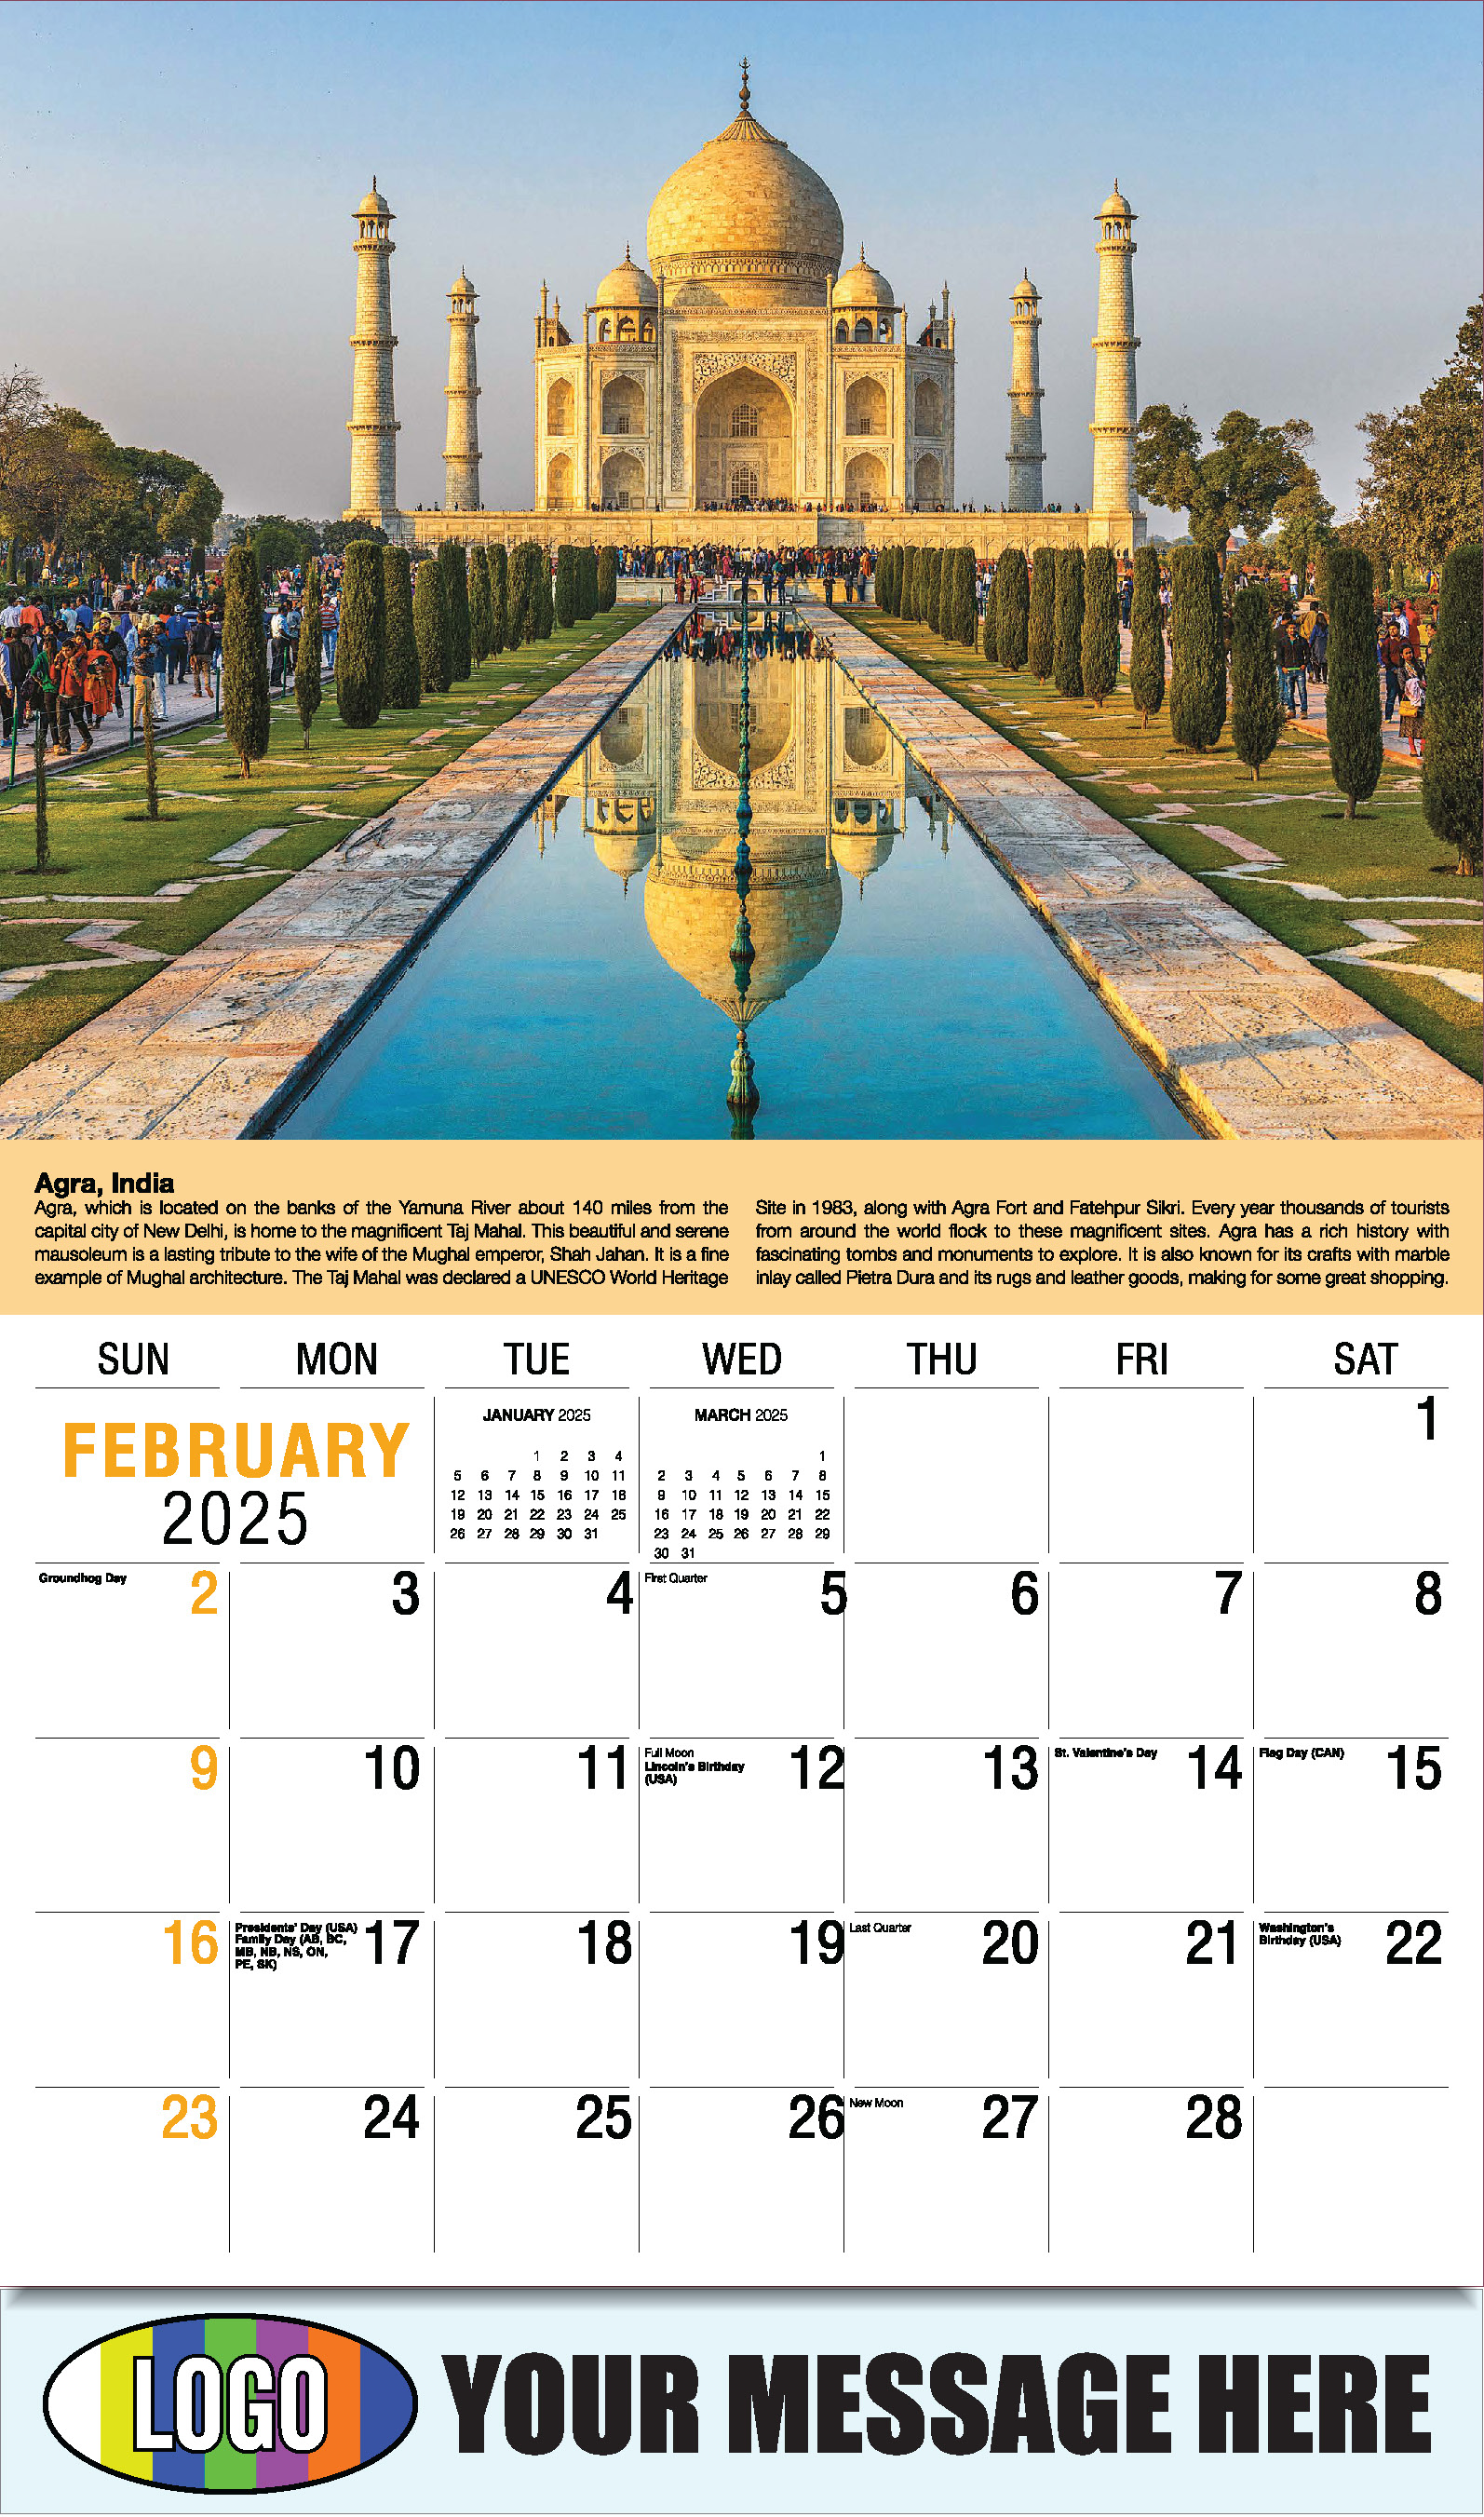 World Travel 2025 Business Advertising Wall Calendar - February